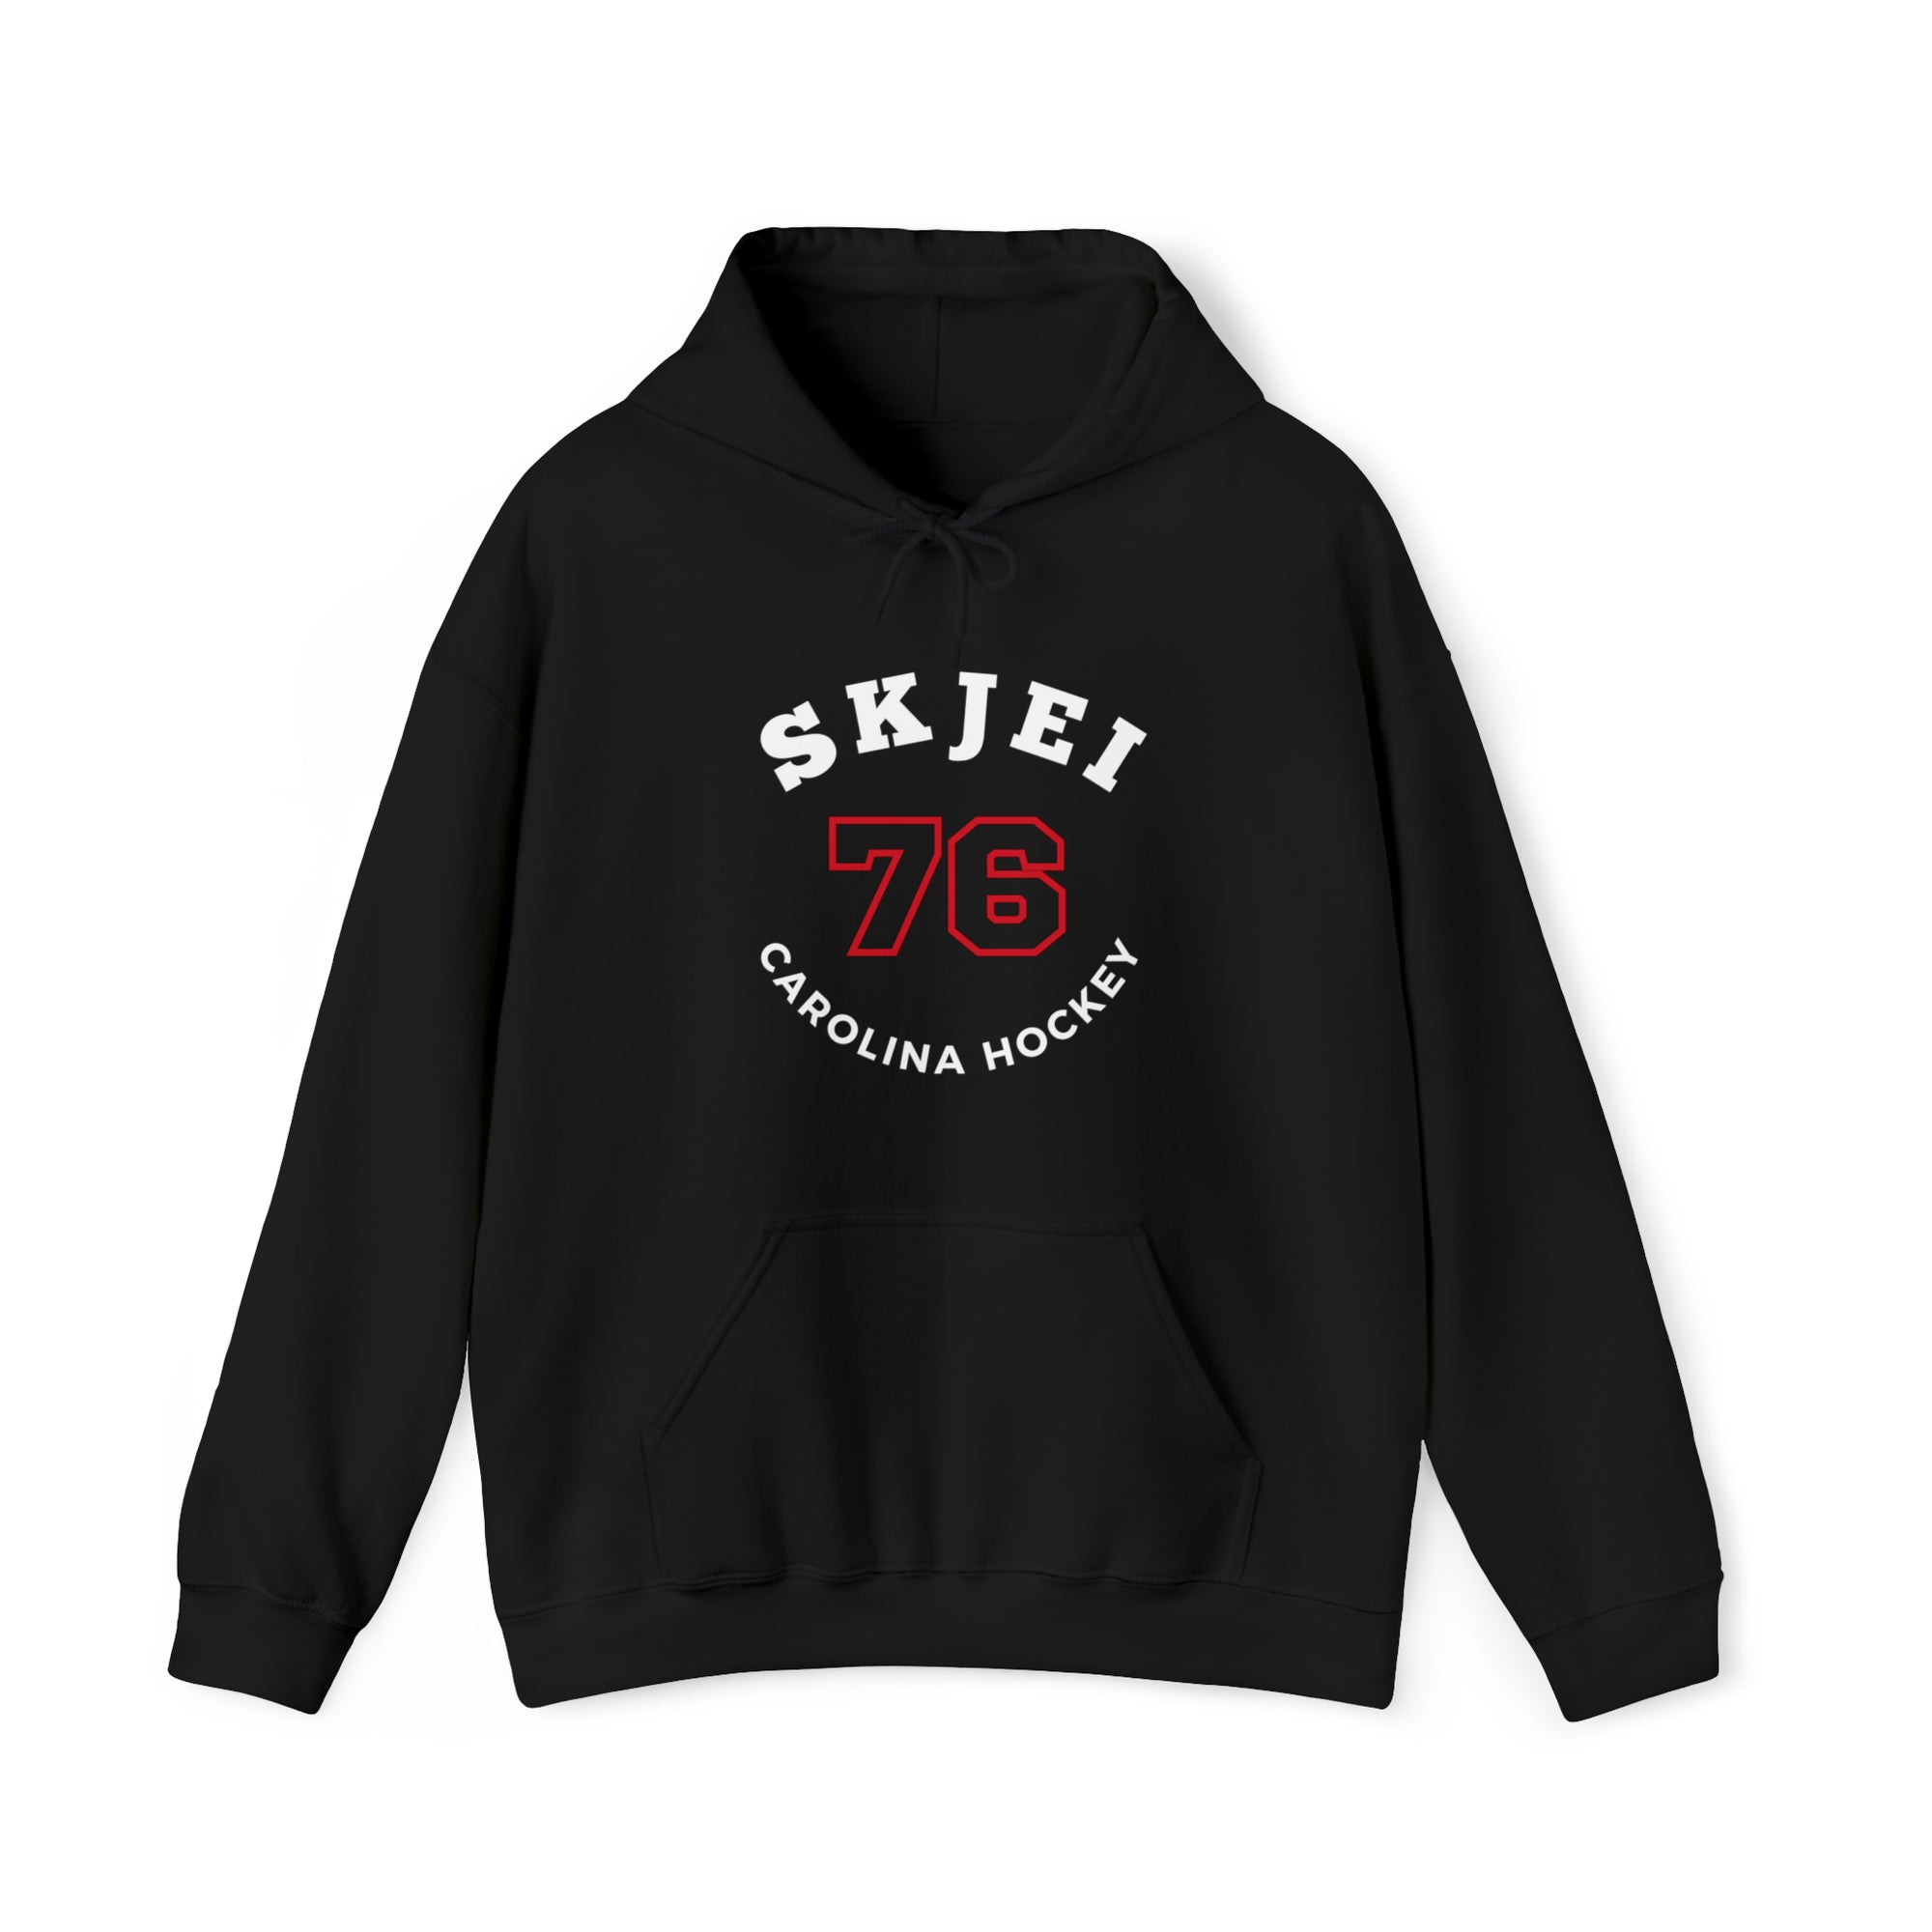 Skjei 76 Carolina Hockey Number Arch Design Unisex Hooded Sweatshirt